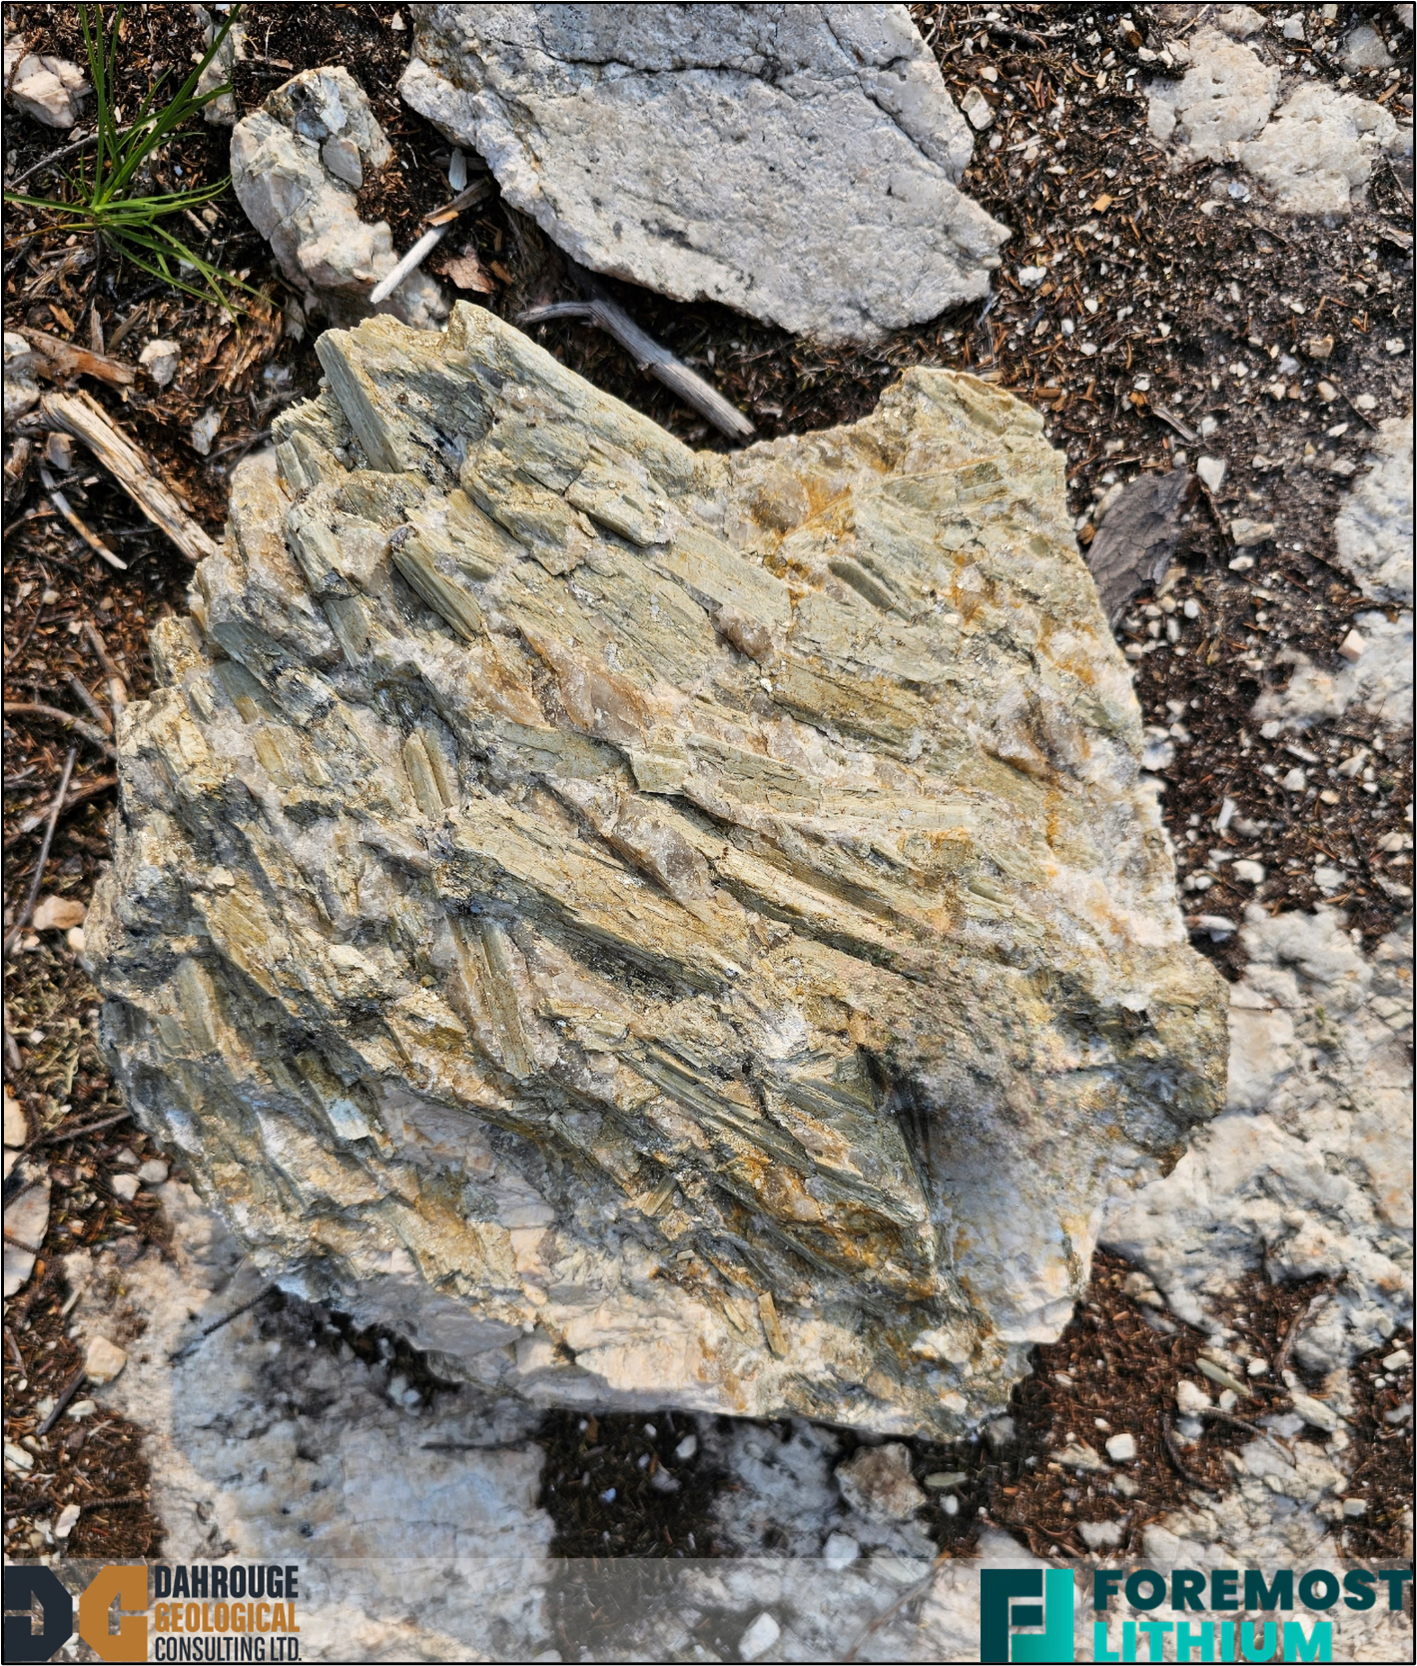 Spodumene-rich boulder excavated during historical blasting at the B2 pegmatite.